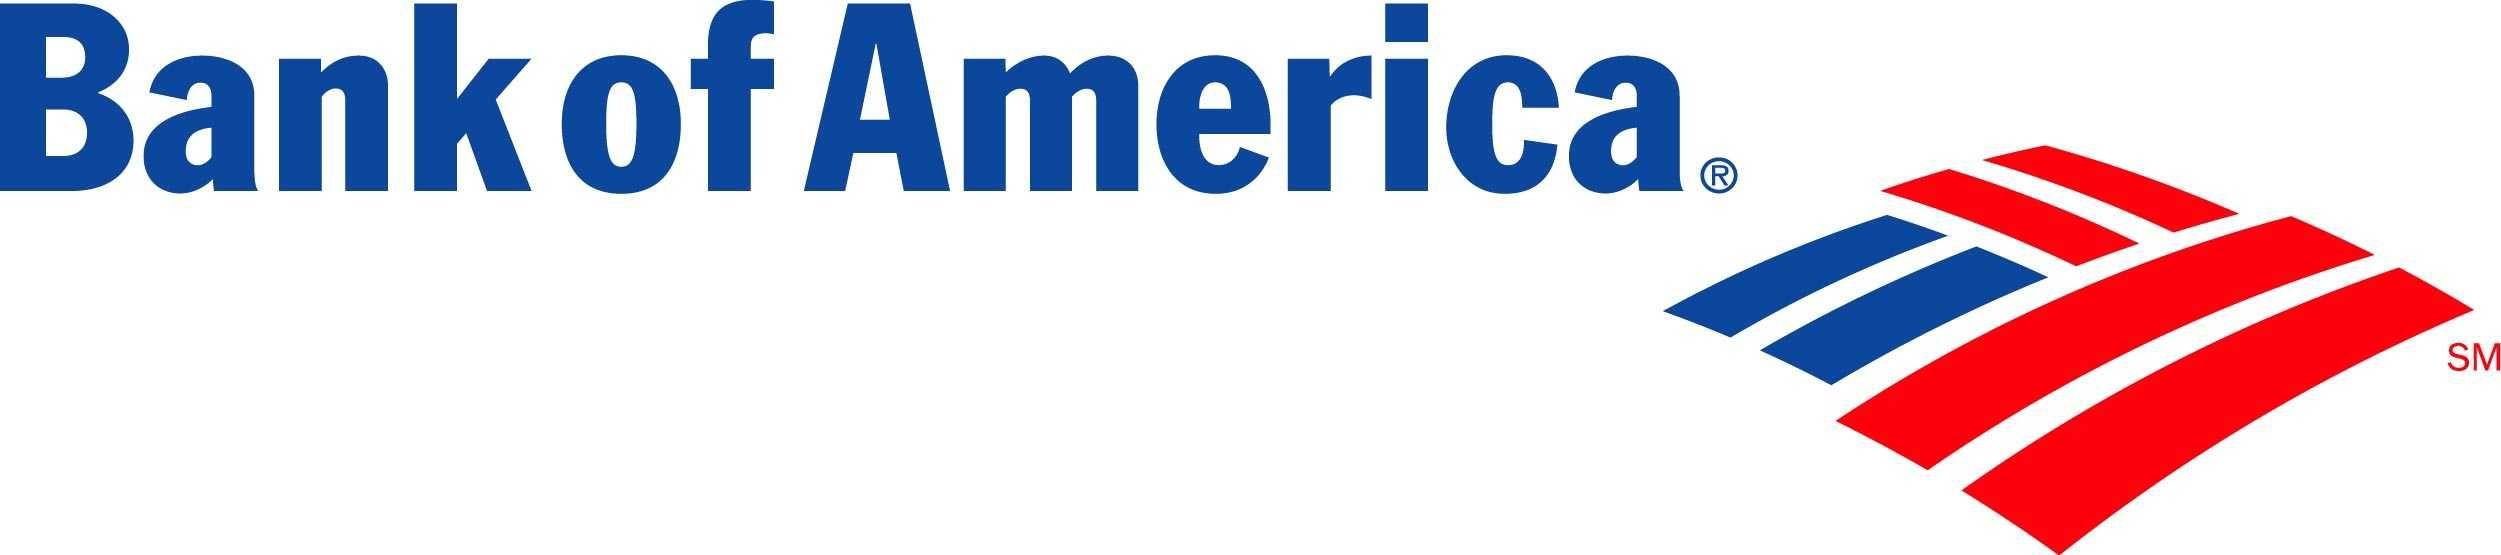 Bank of America Logo】. Bank of America Logo Vector PNG Free Download